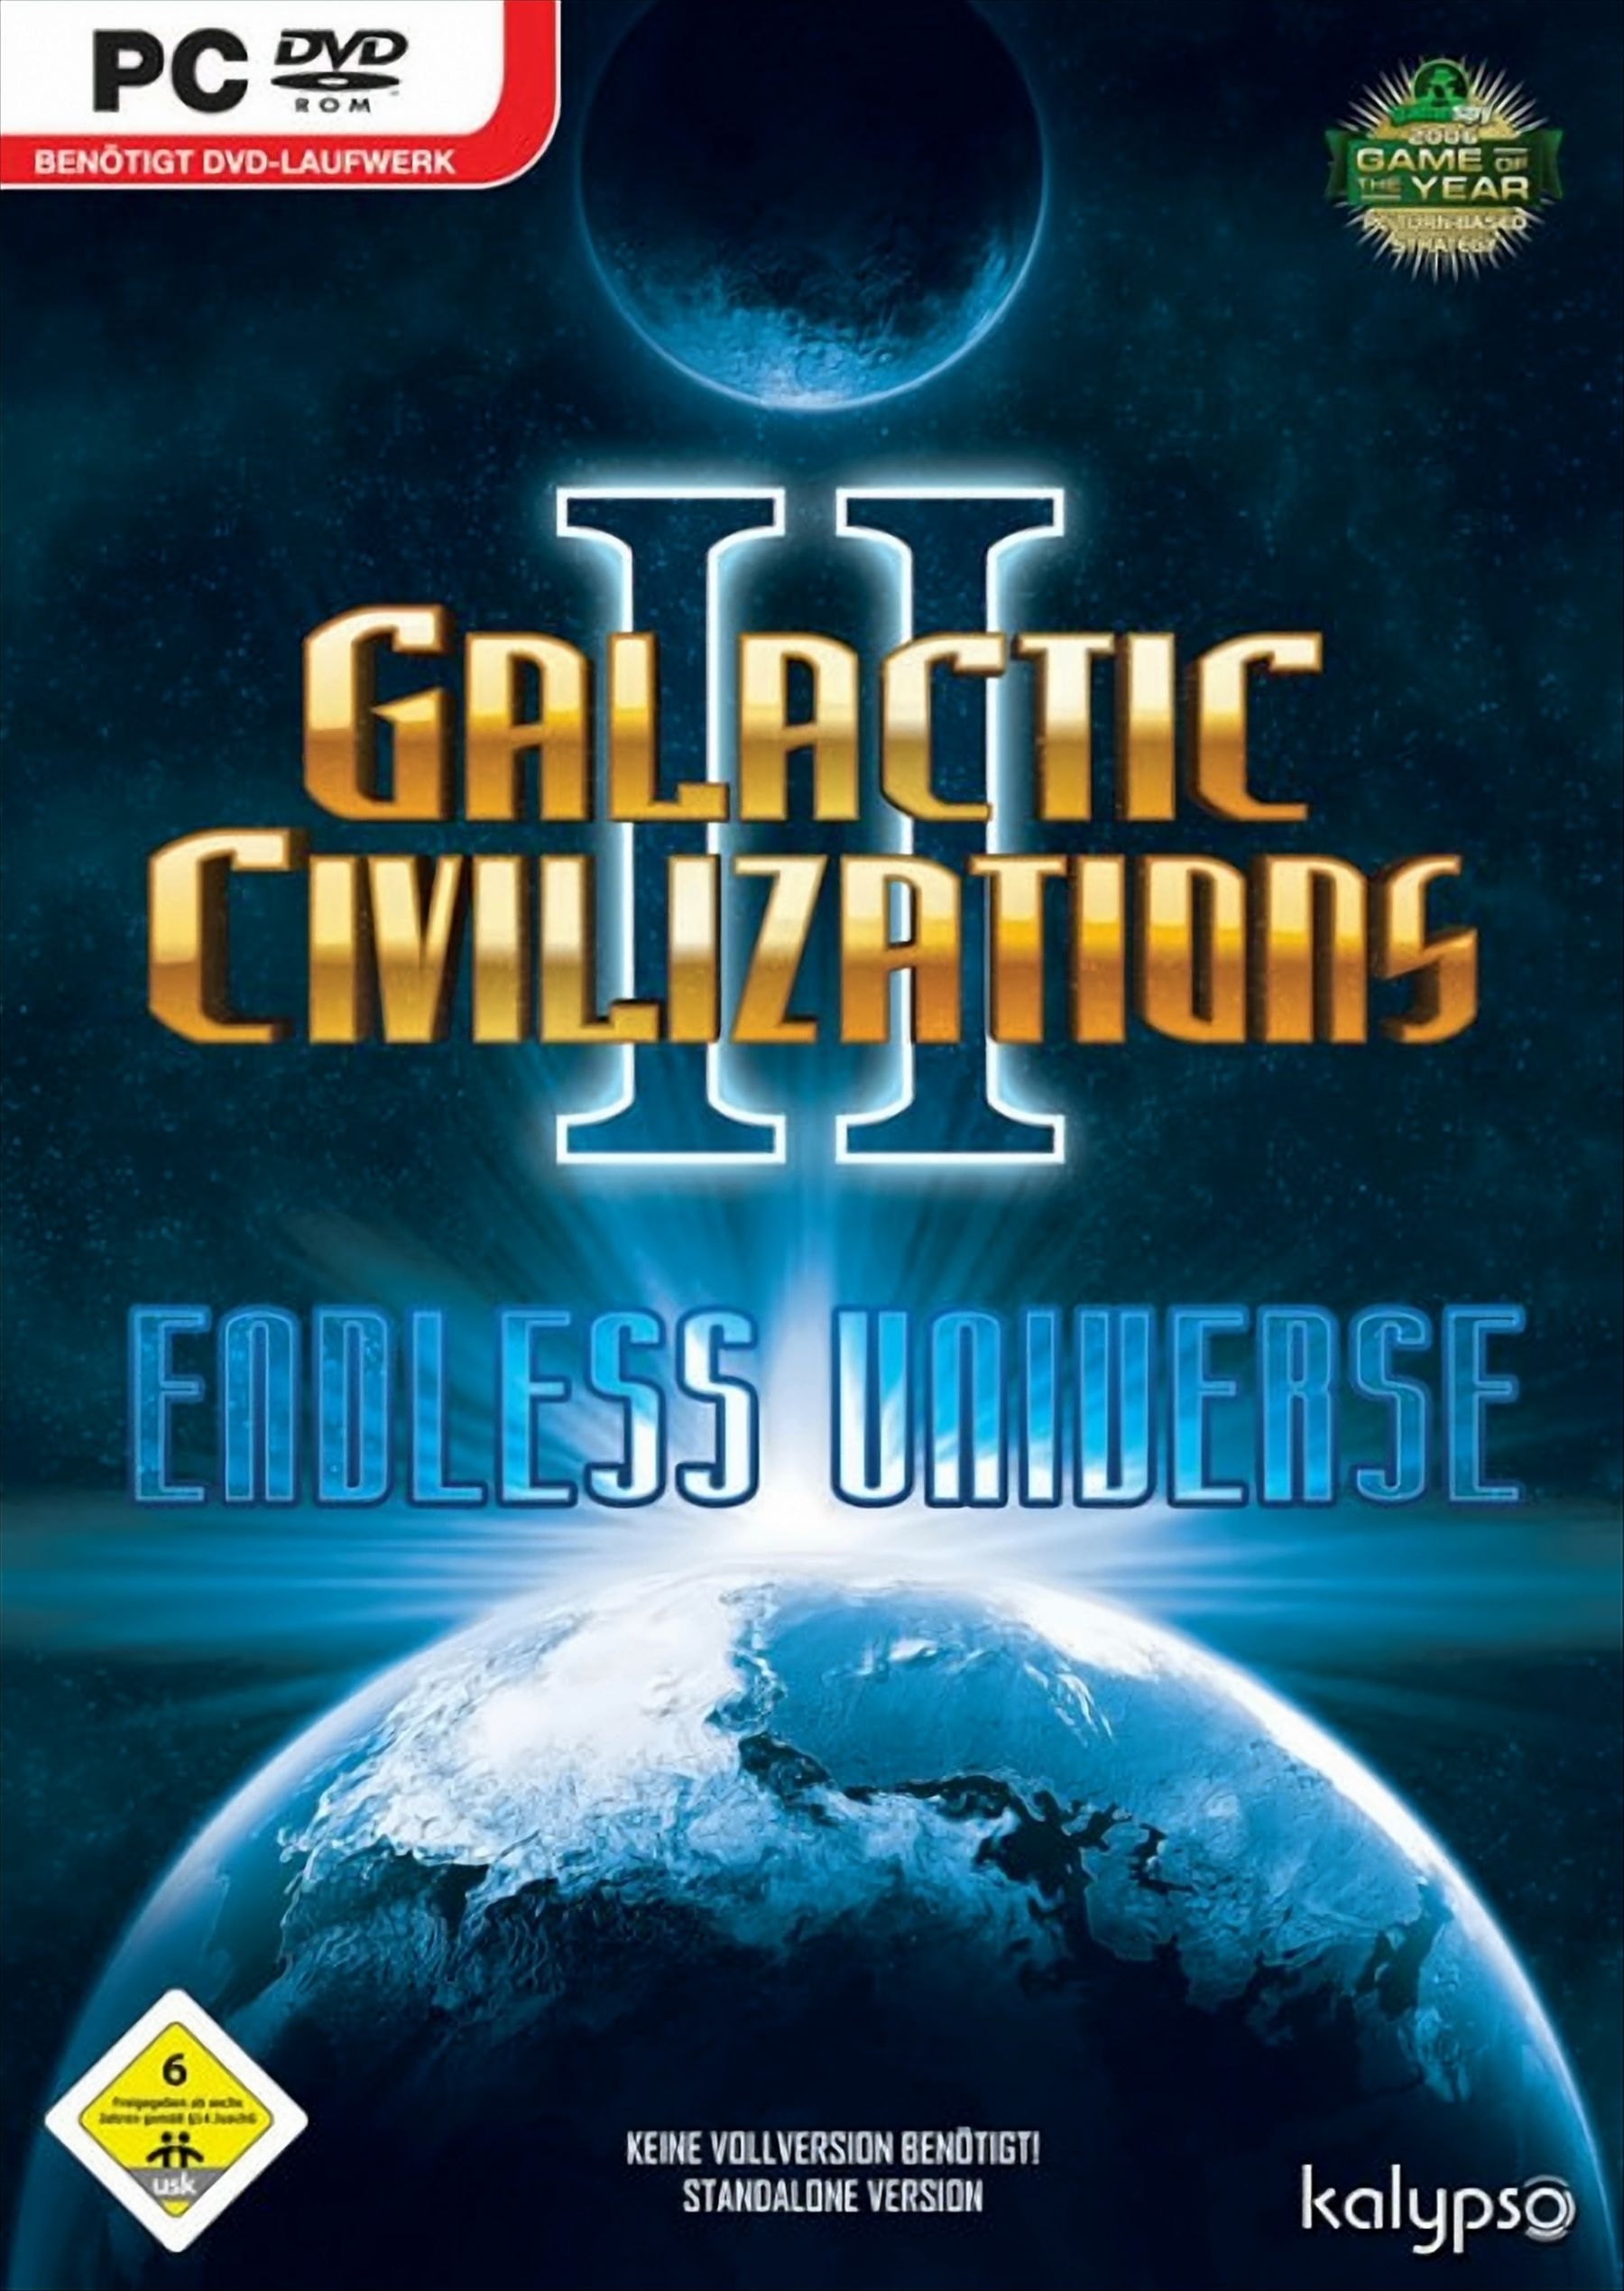 Universe - Endless Galactic [PC] Civilizations II: